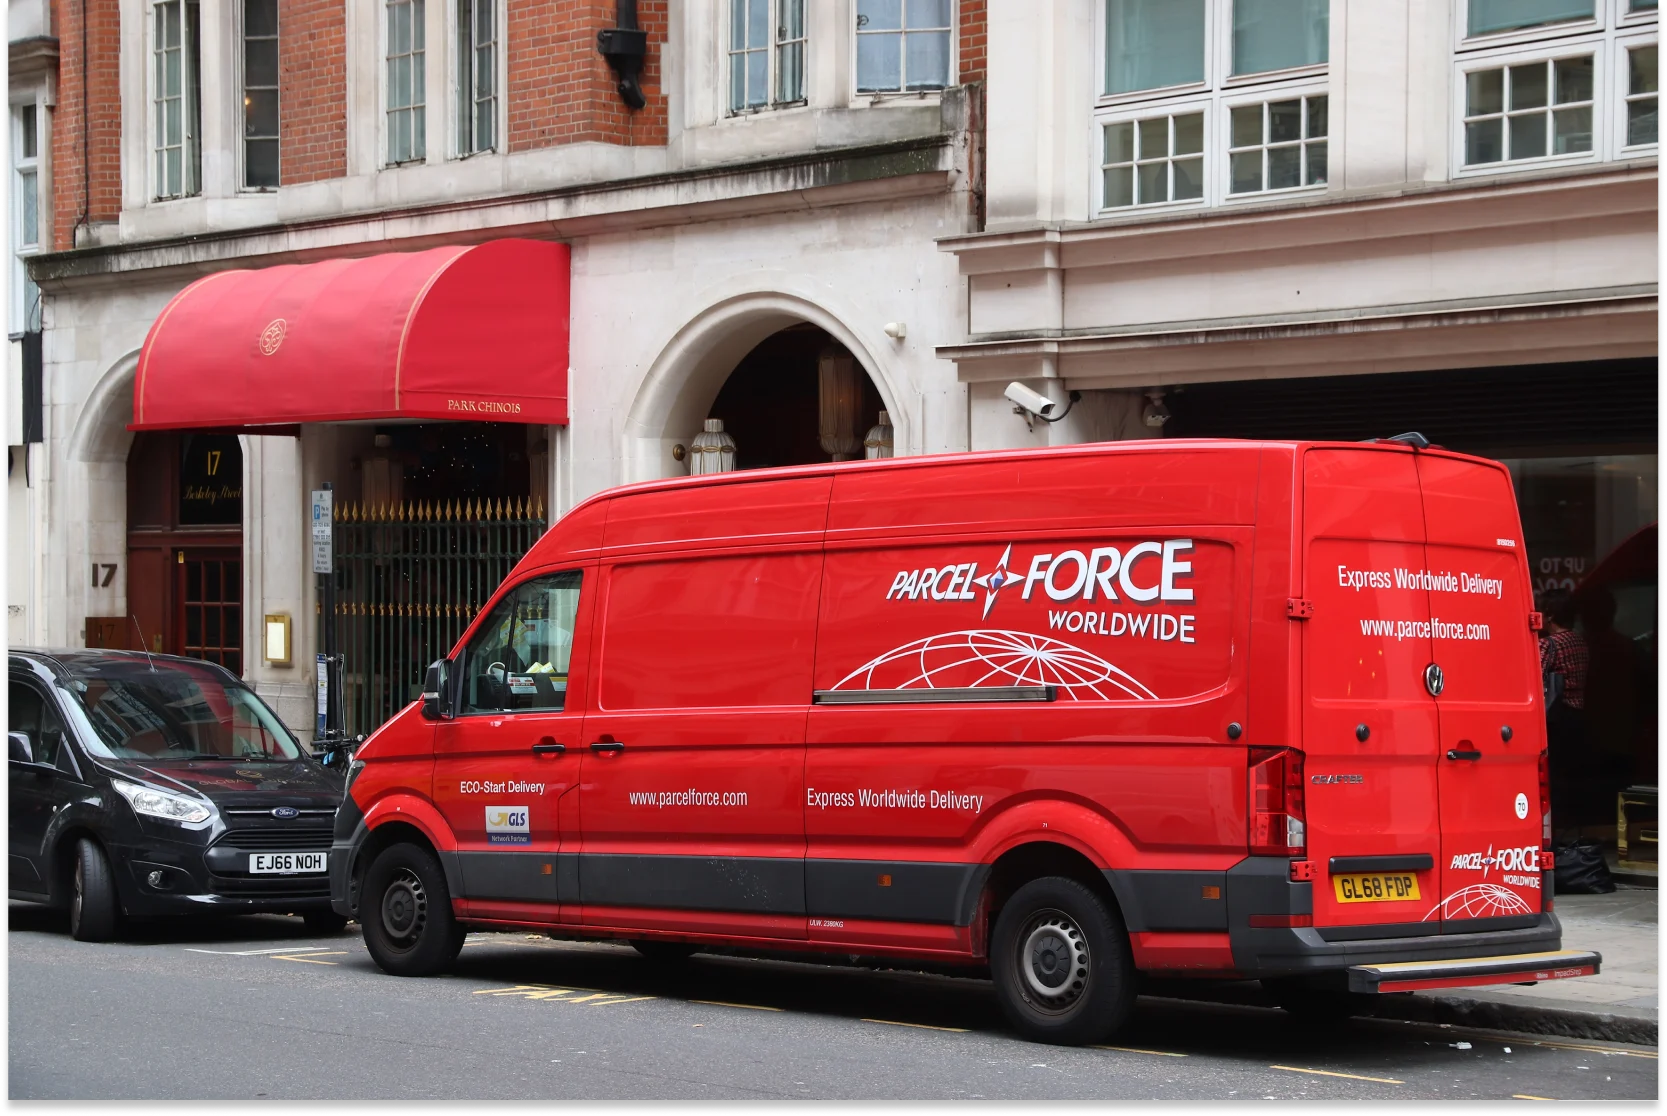 Parcelforce delivery van parked in street